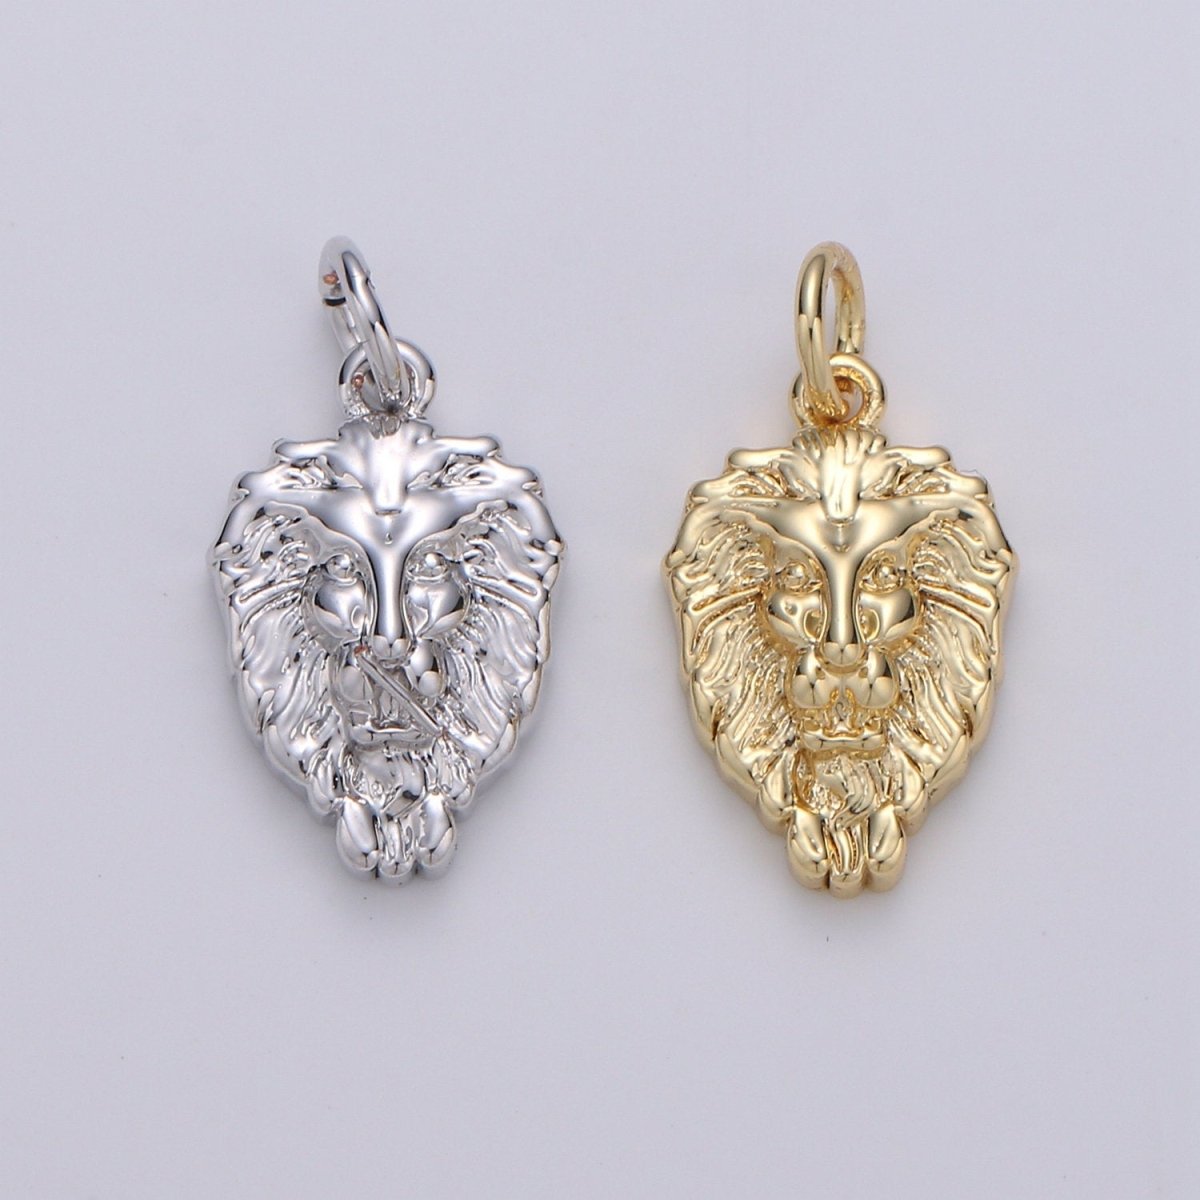 Dainty Lion Charm Gold Medallion, Silver Lion Pendant, Lion King Jewelry, Animal Necklace Charm for Bracelet Earring Necklace Component D-130 D-131 - DLUXCA